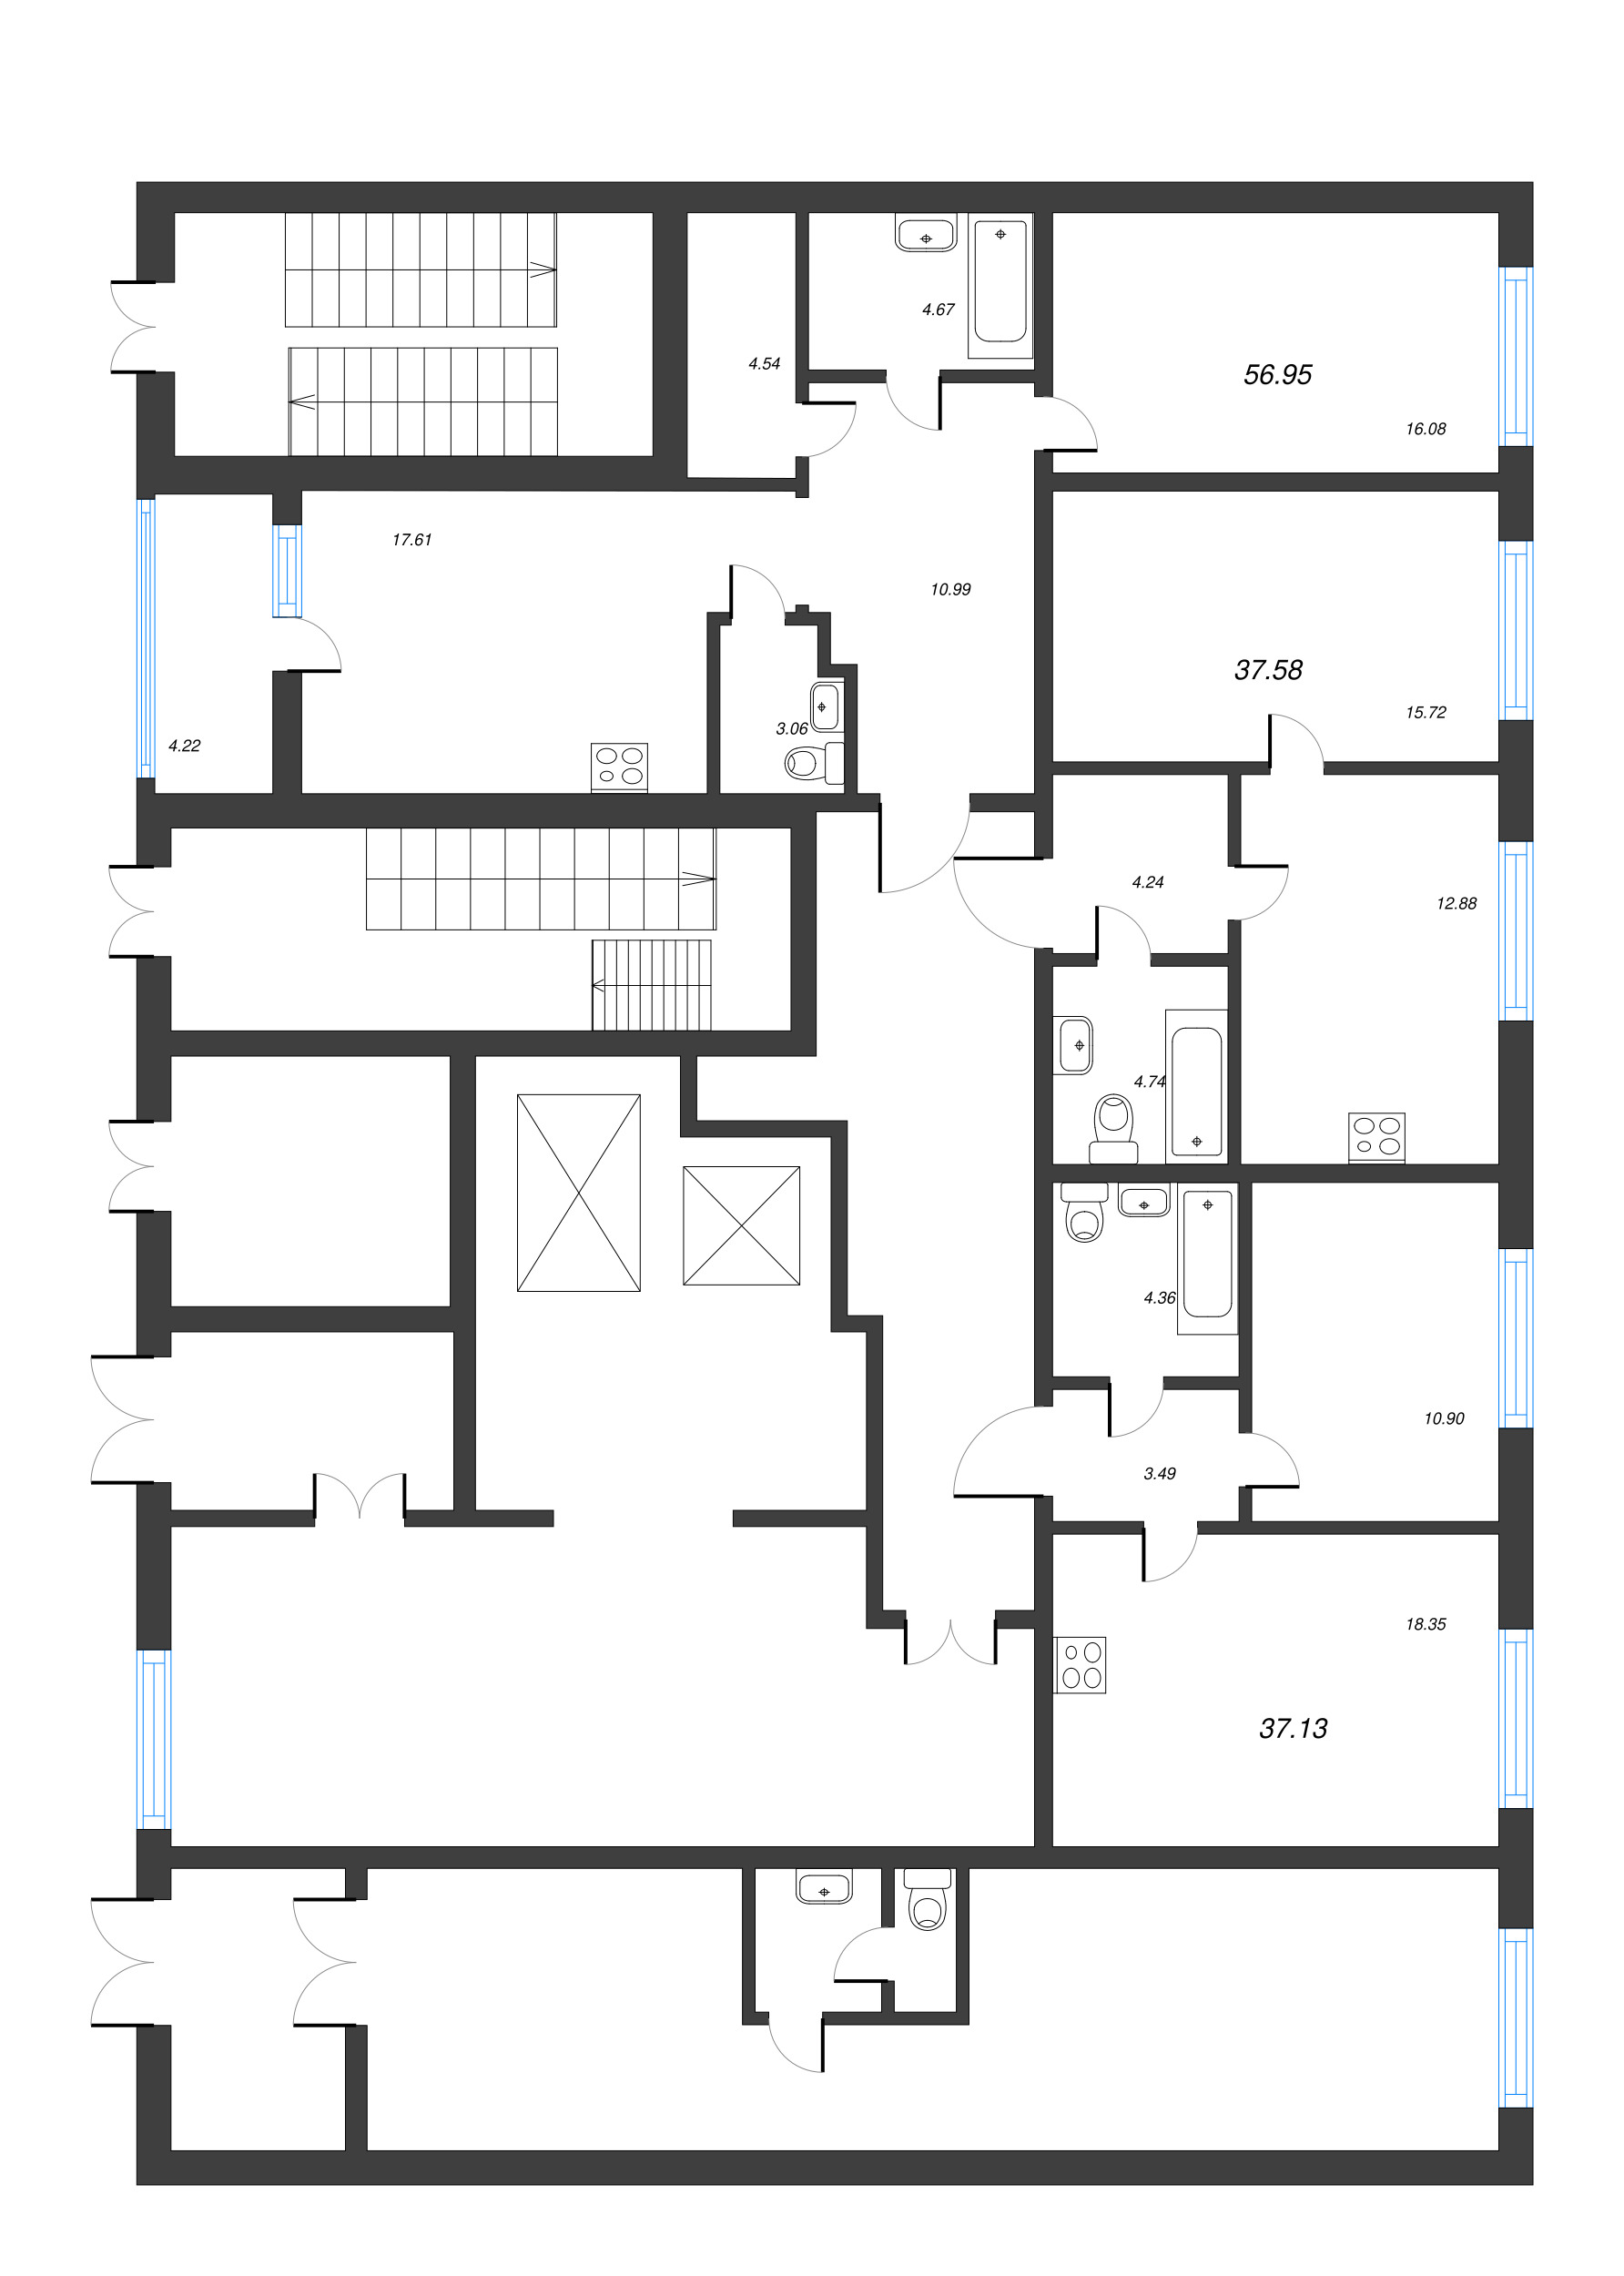 1-комнатная квартира, 37.58 м² в ЖК "Чёрная речка от Ильича" - планировка этажа